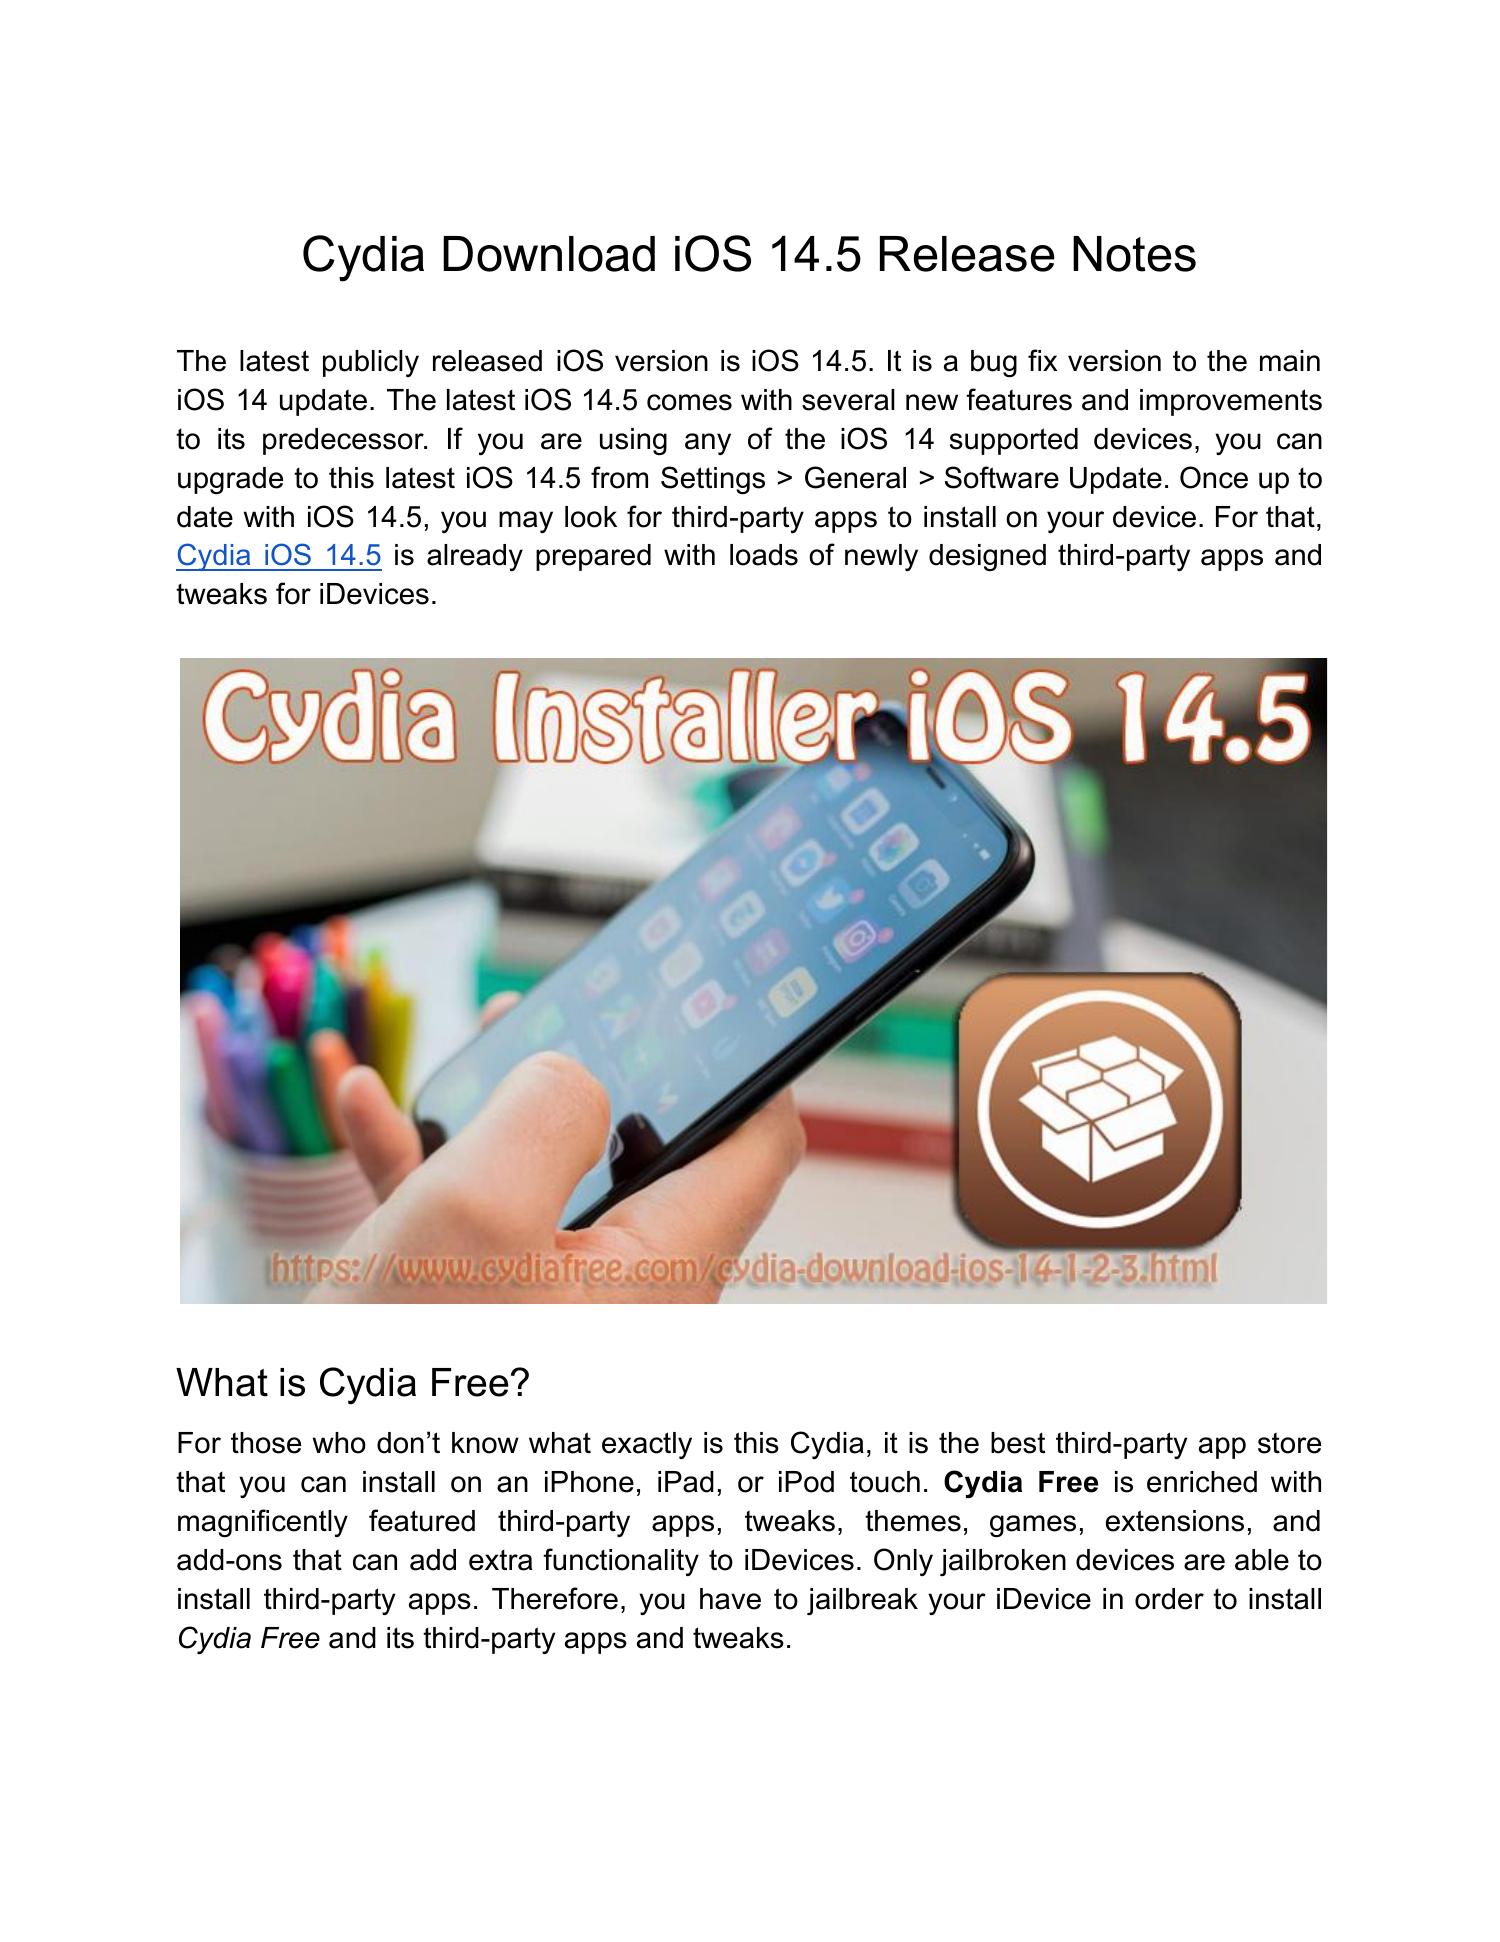 cydia download iphone jailbreak free